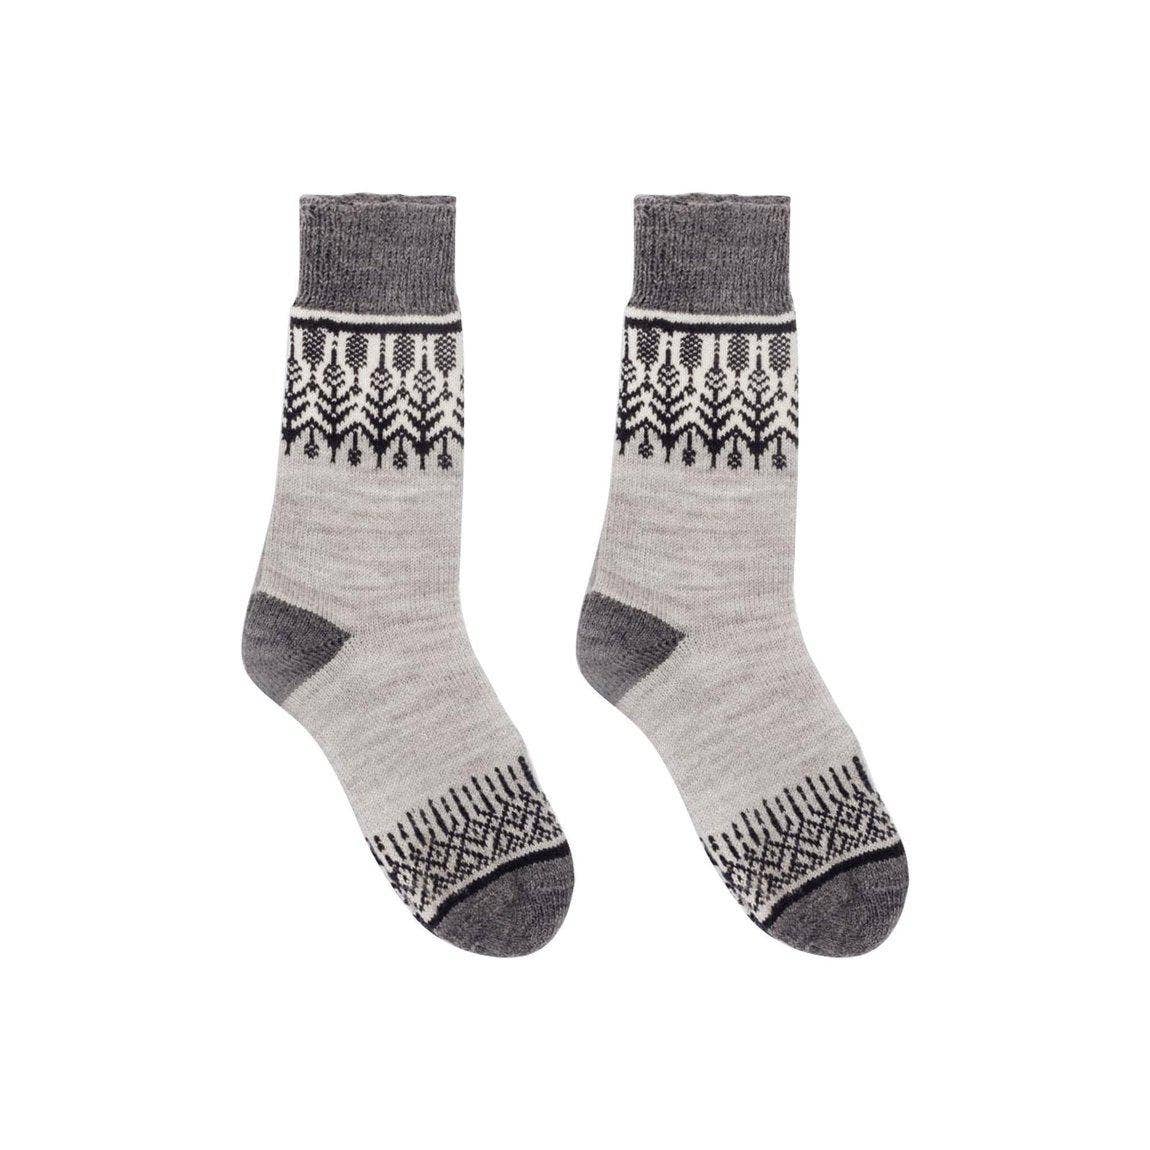 Nordic Merino Wool Socks (Yule - Ash) - Unisex: Medium and Large